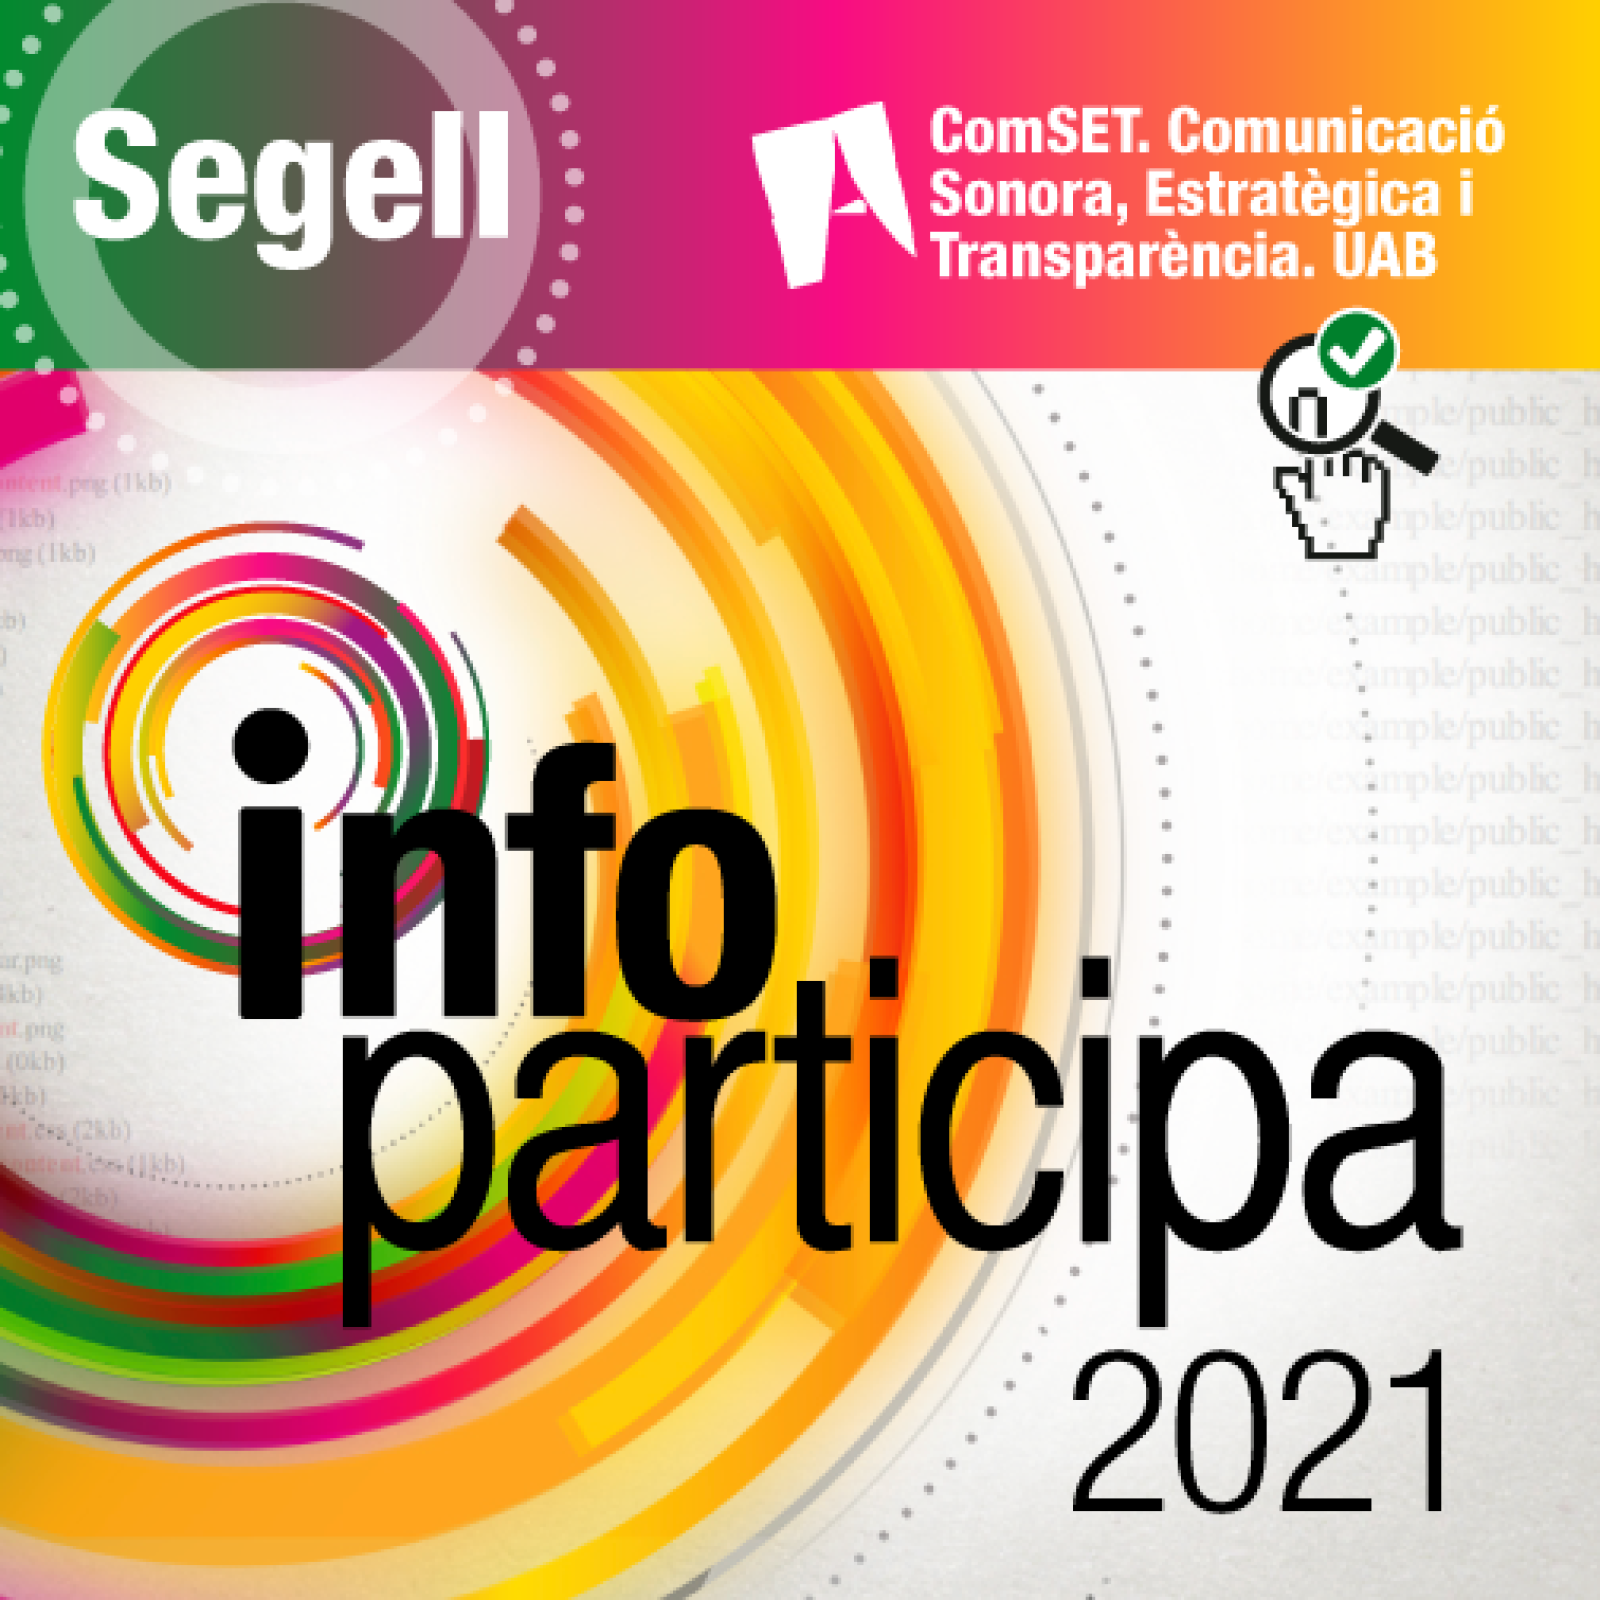 La Universitat Autònoma de Barcelona entrega a Santa Eulària des Riu el único sello Infoparticipa 2021 a la transparencia municipal de Balears